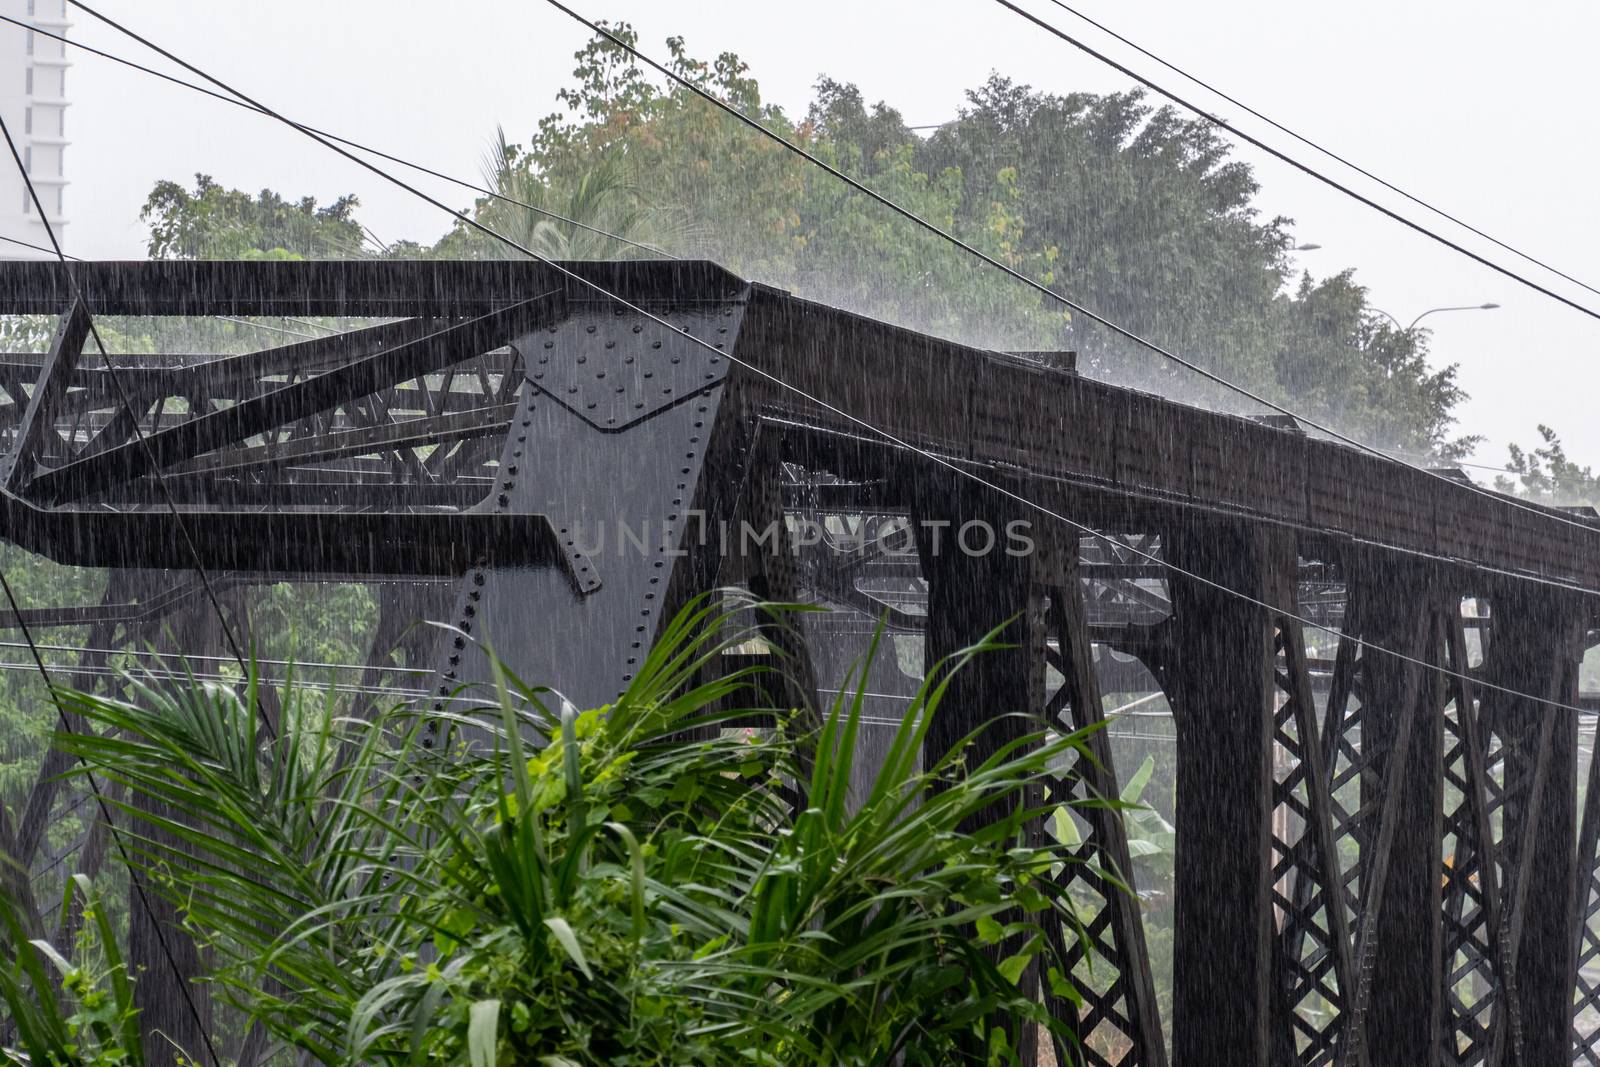 Heavy rainfall hitting steel structure during monsoon season